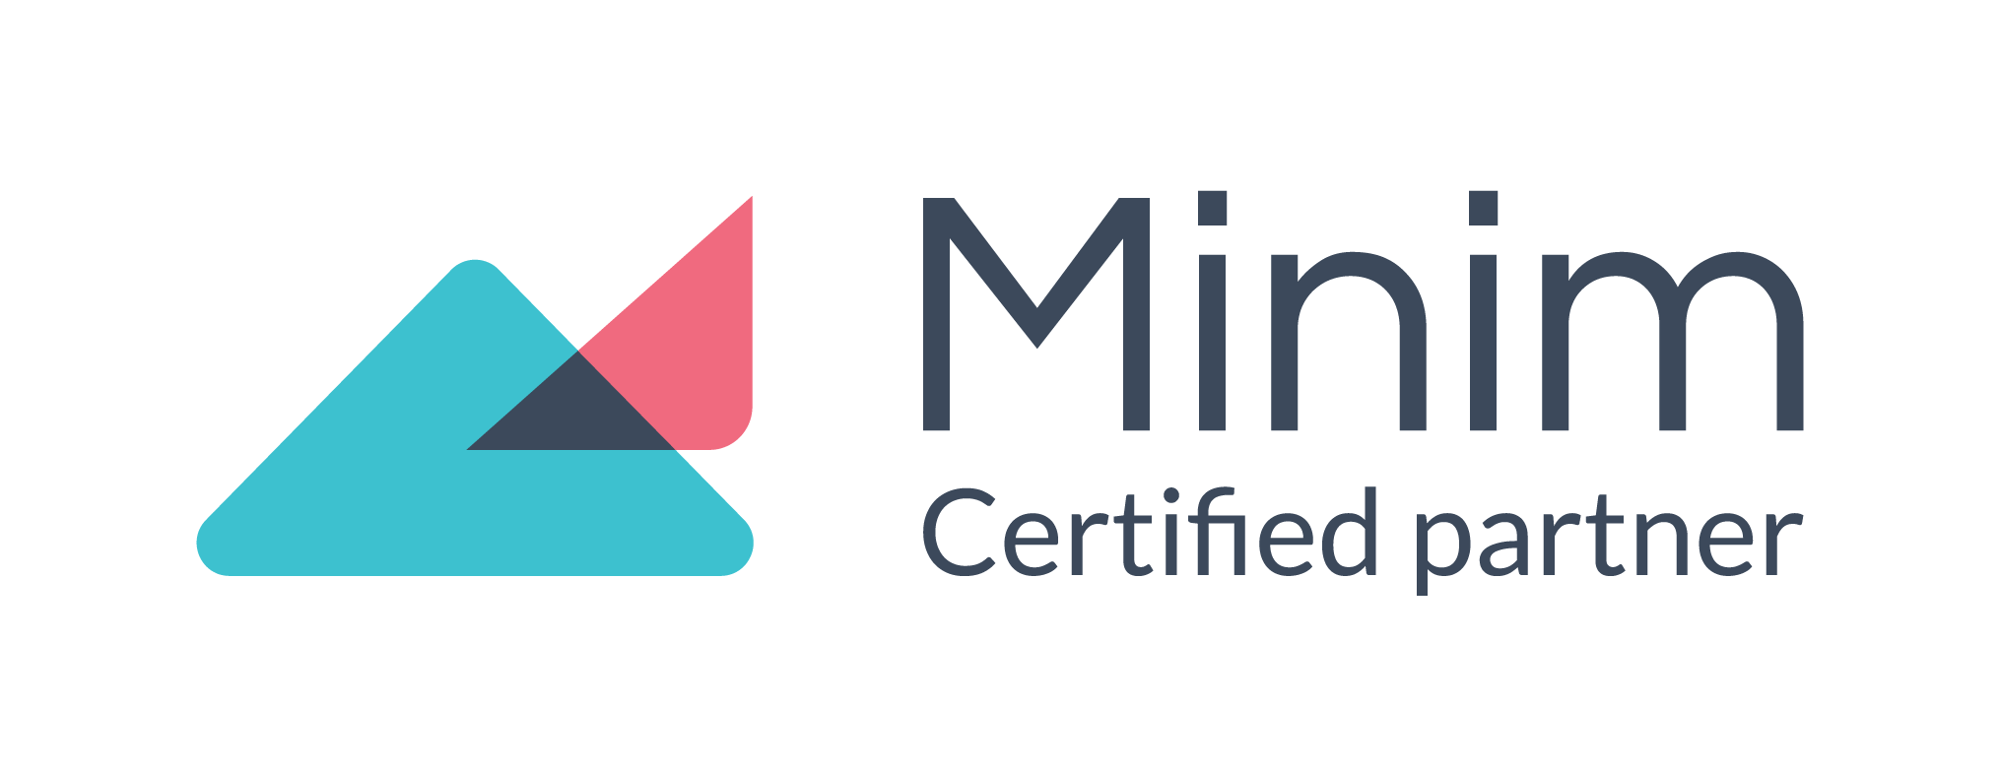 Minim Certified partner badge - white